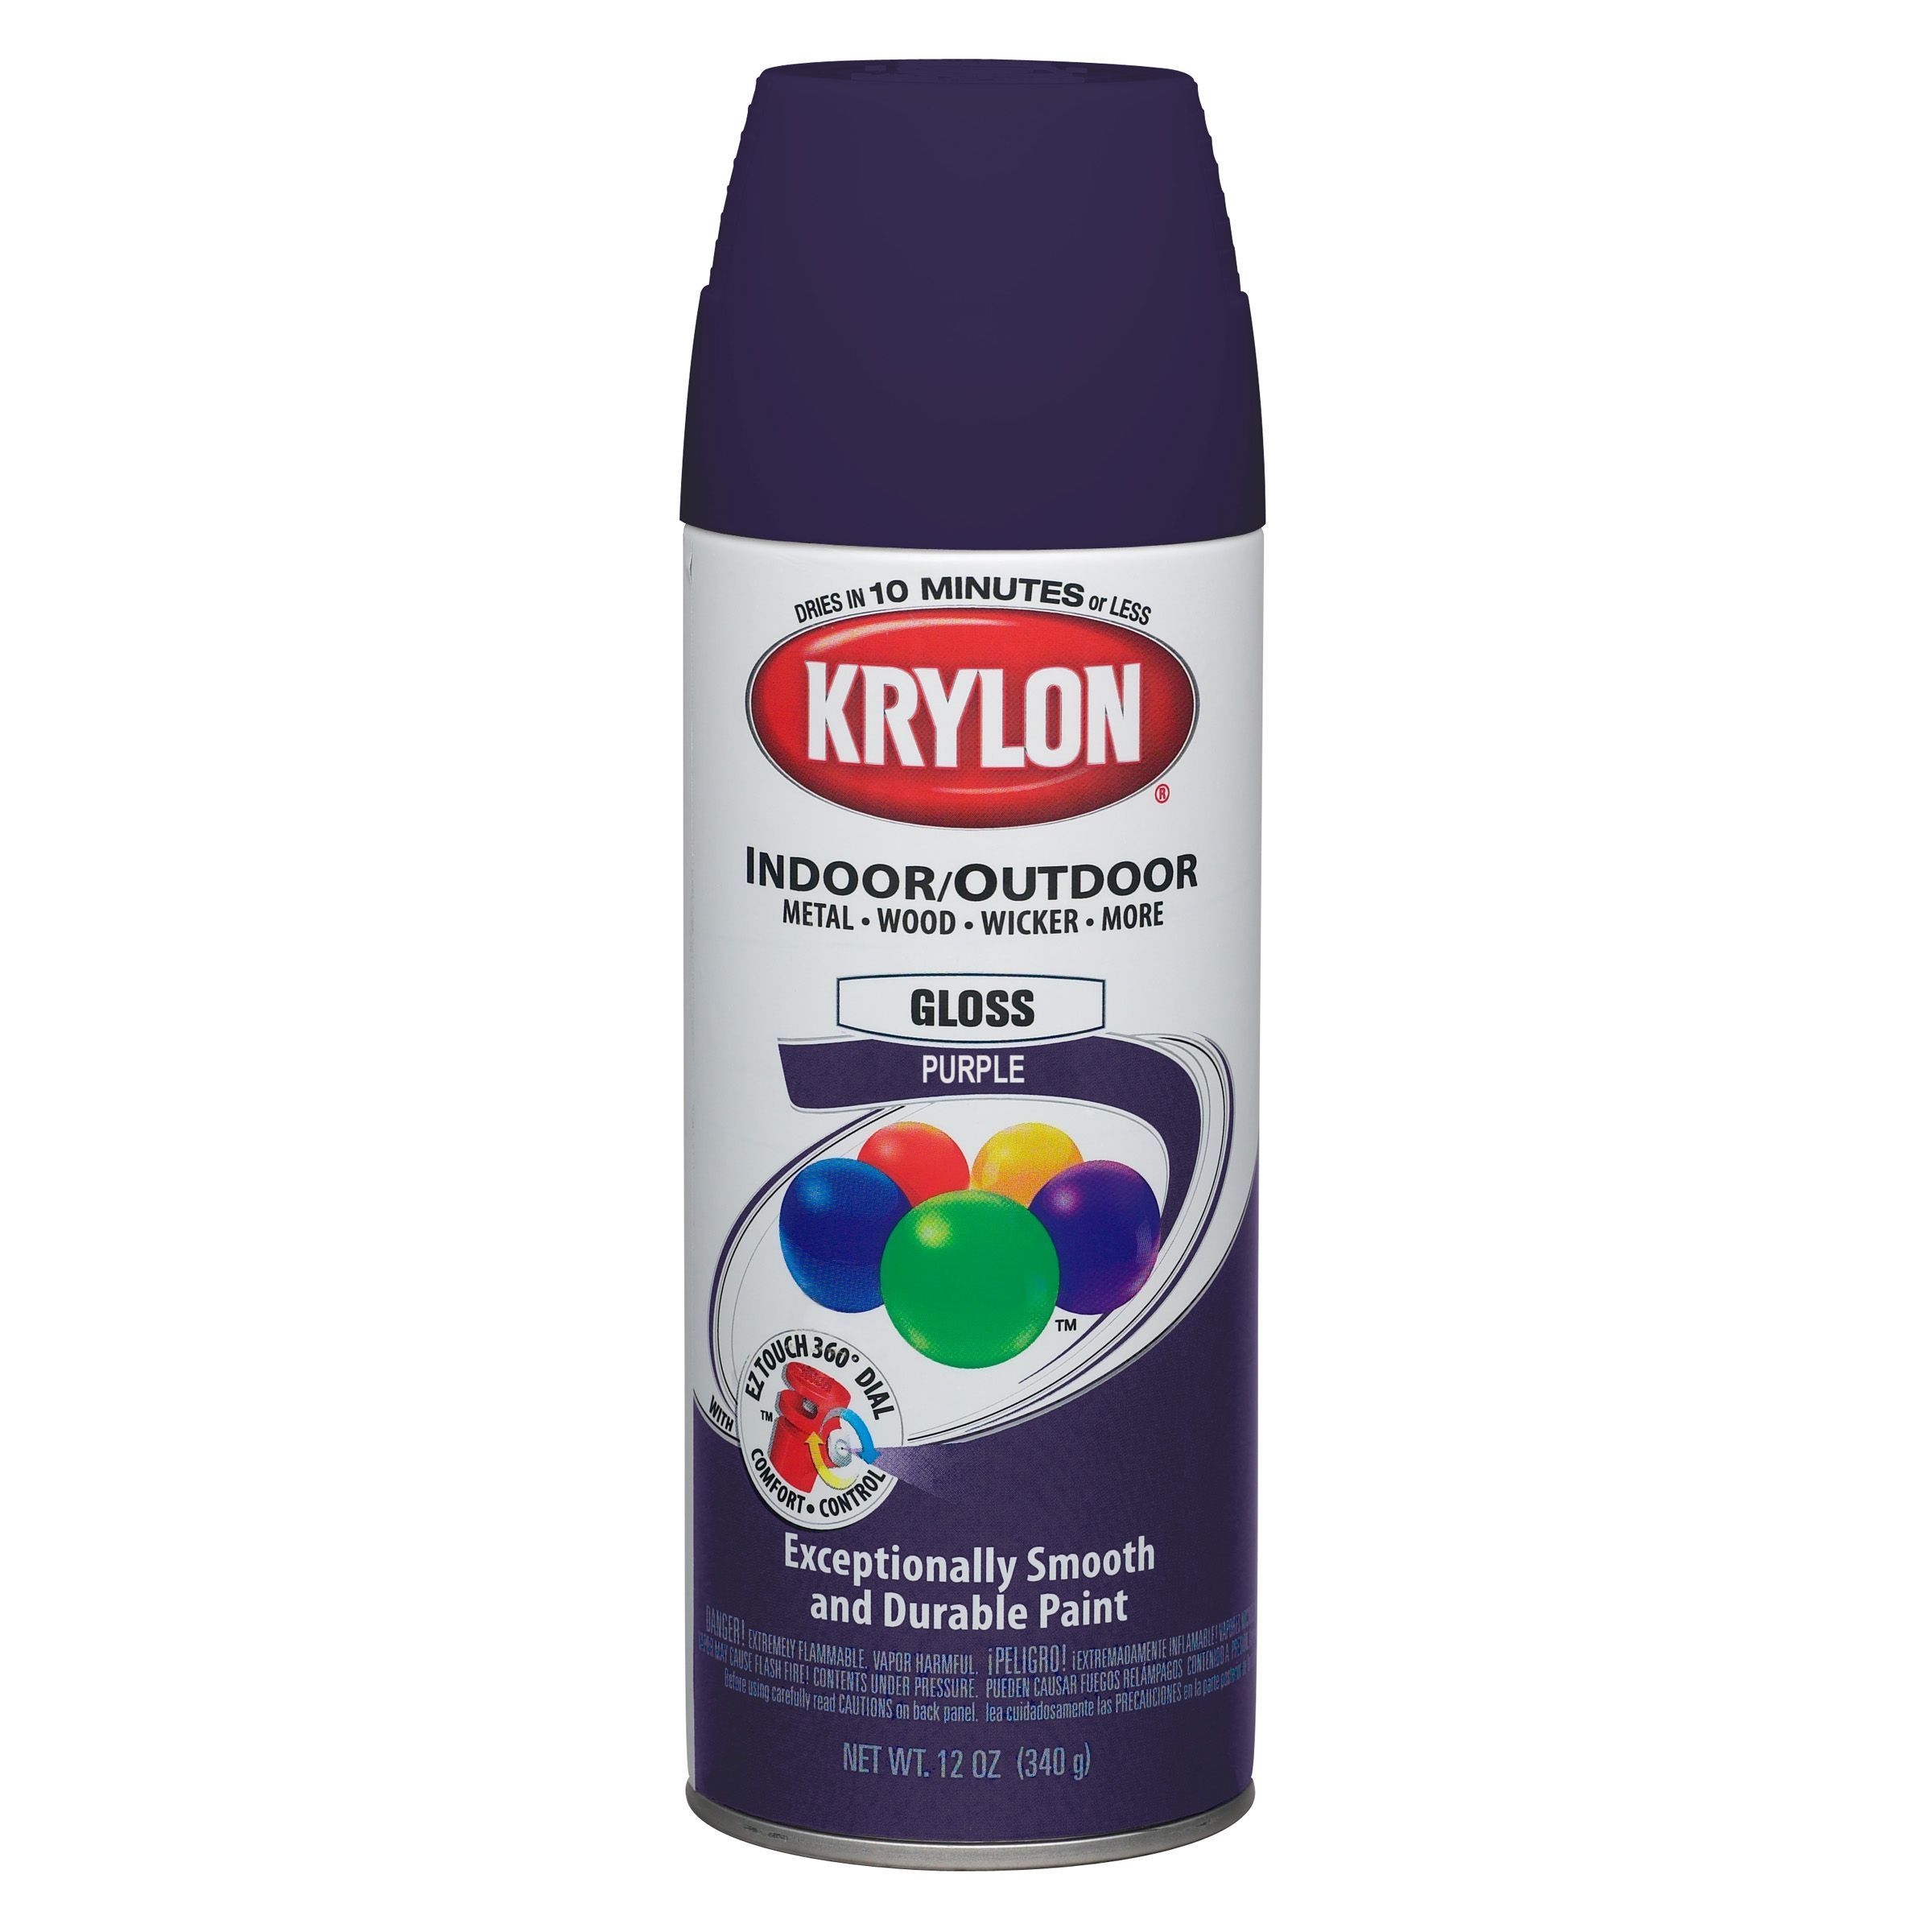 Krylon Clear Gloss Colormaster™ Interior/Exterior Aerosol